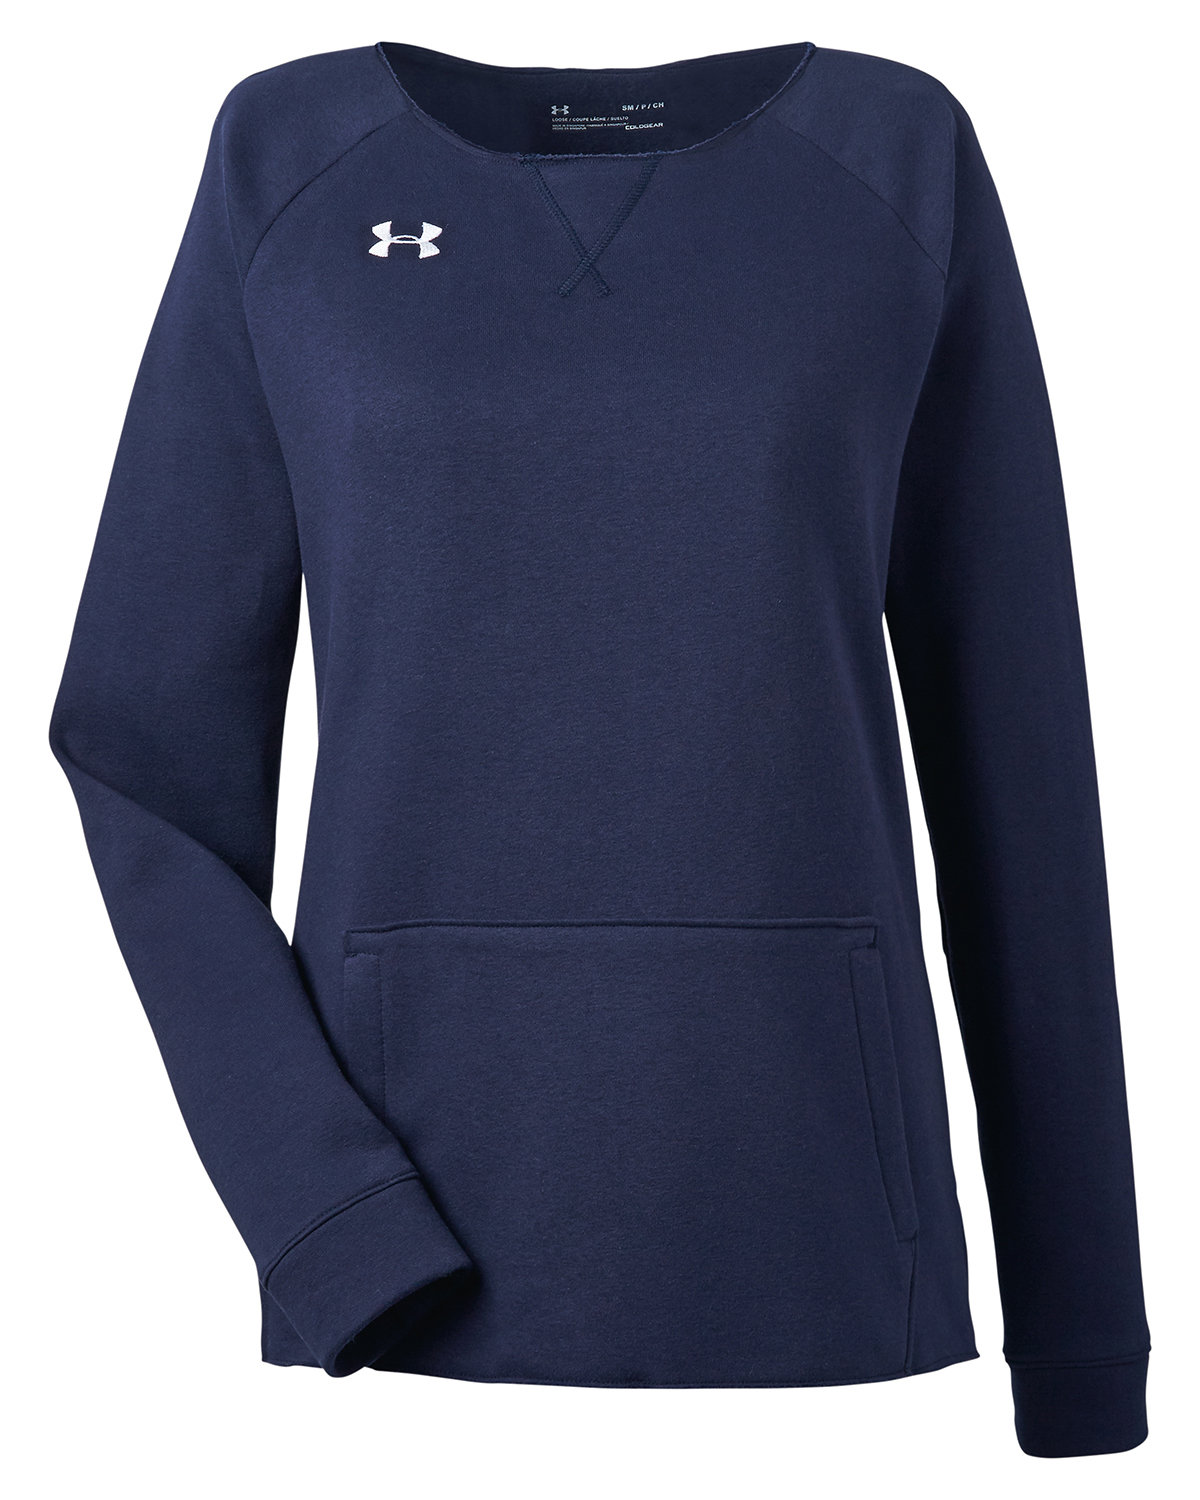 Branded Under Armour Ladies’ Hustle Fleece Crewneck Sweatshirt Midnight Navy/White